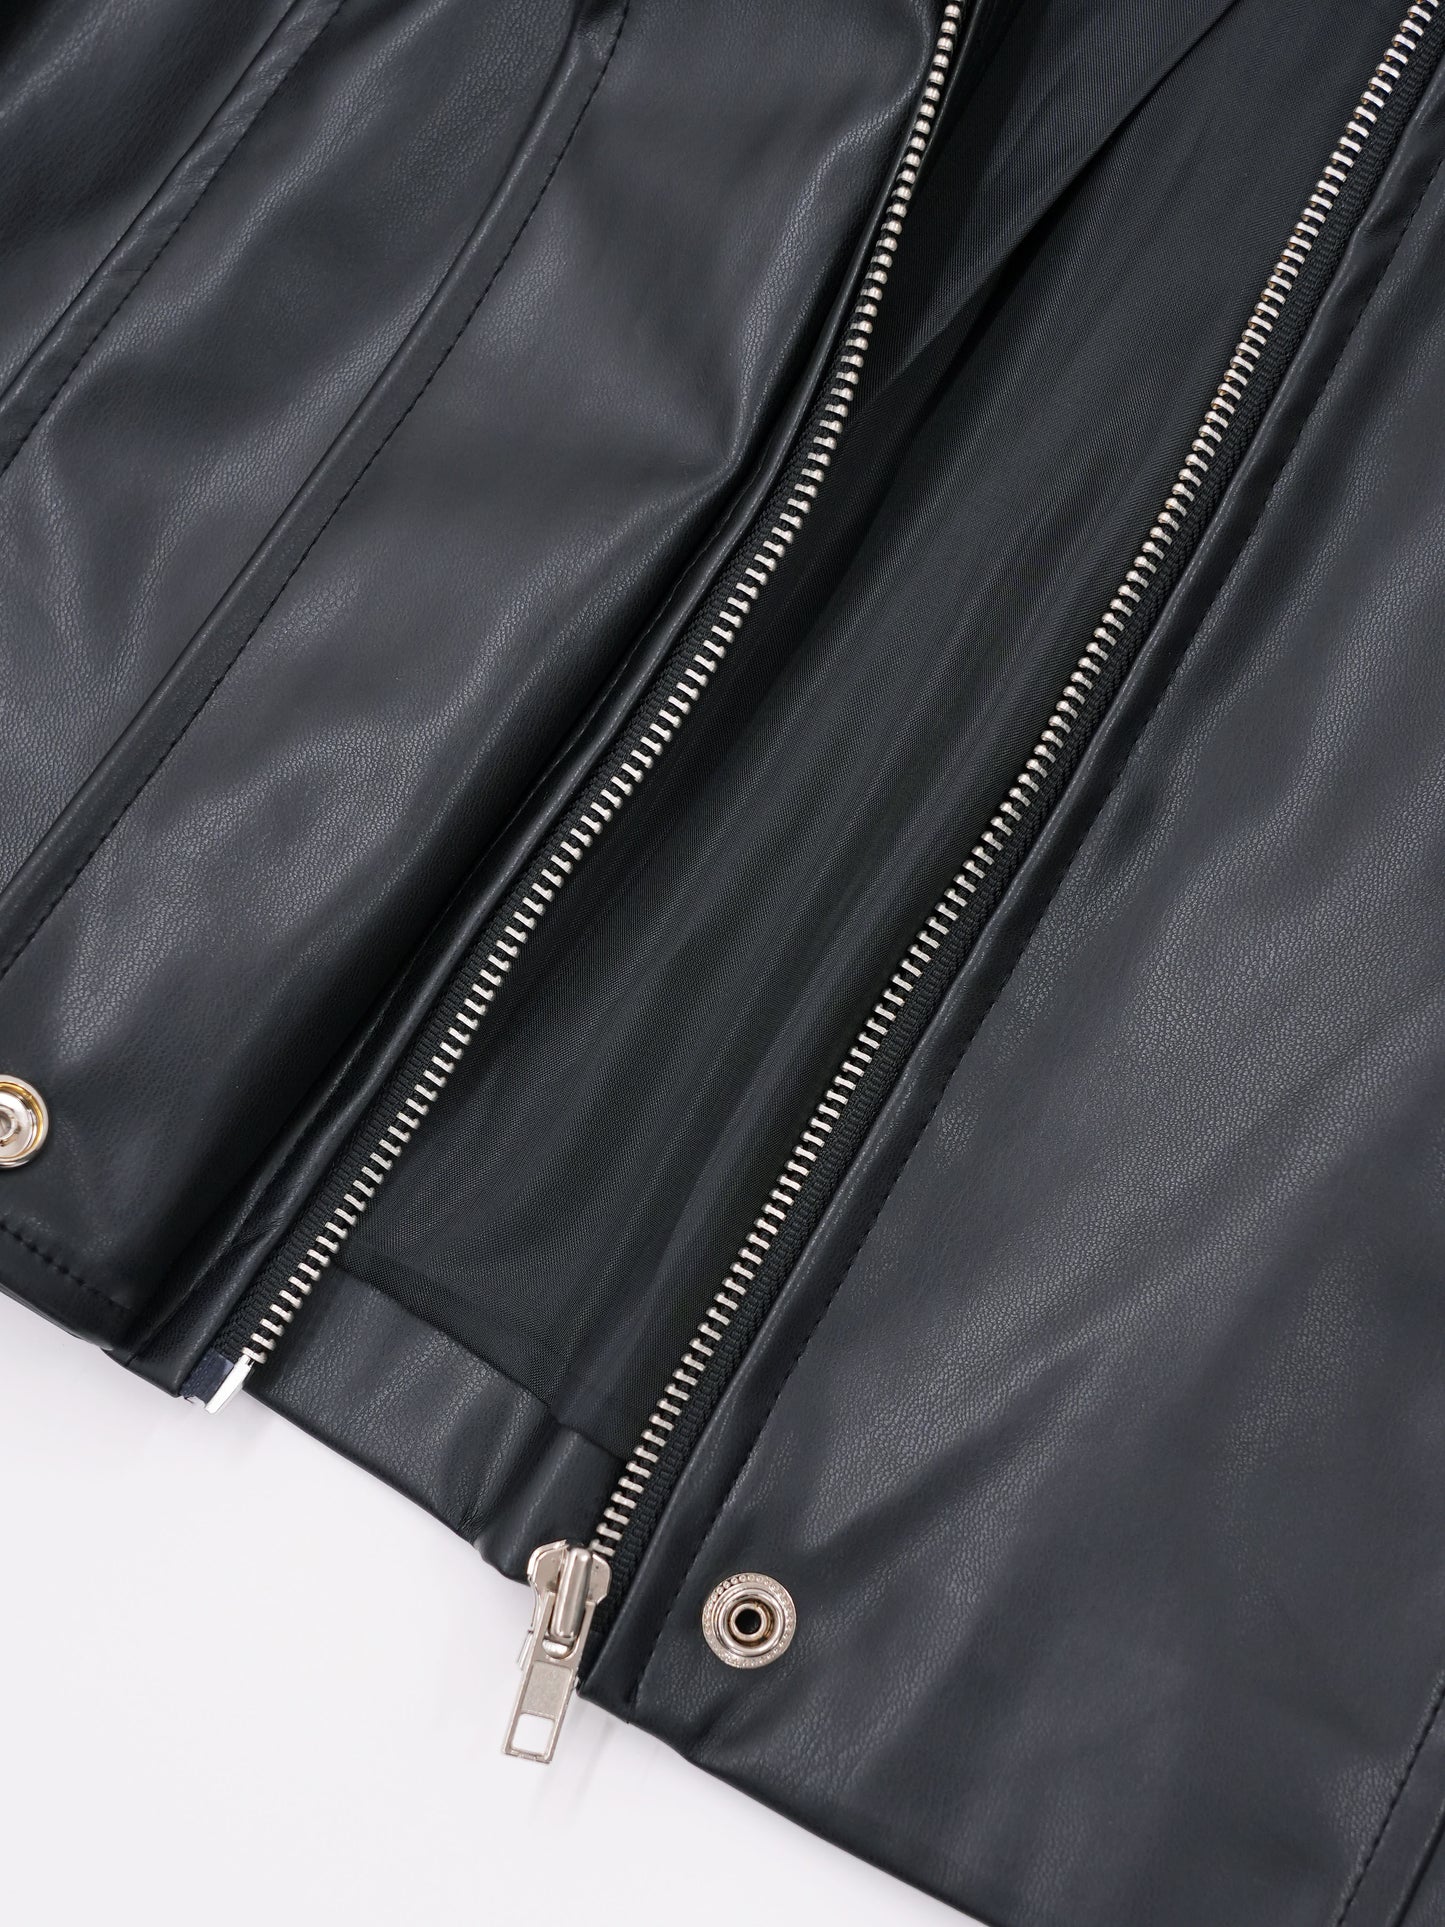 fake leather riders jacket